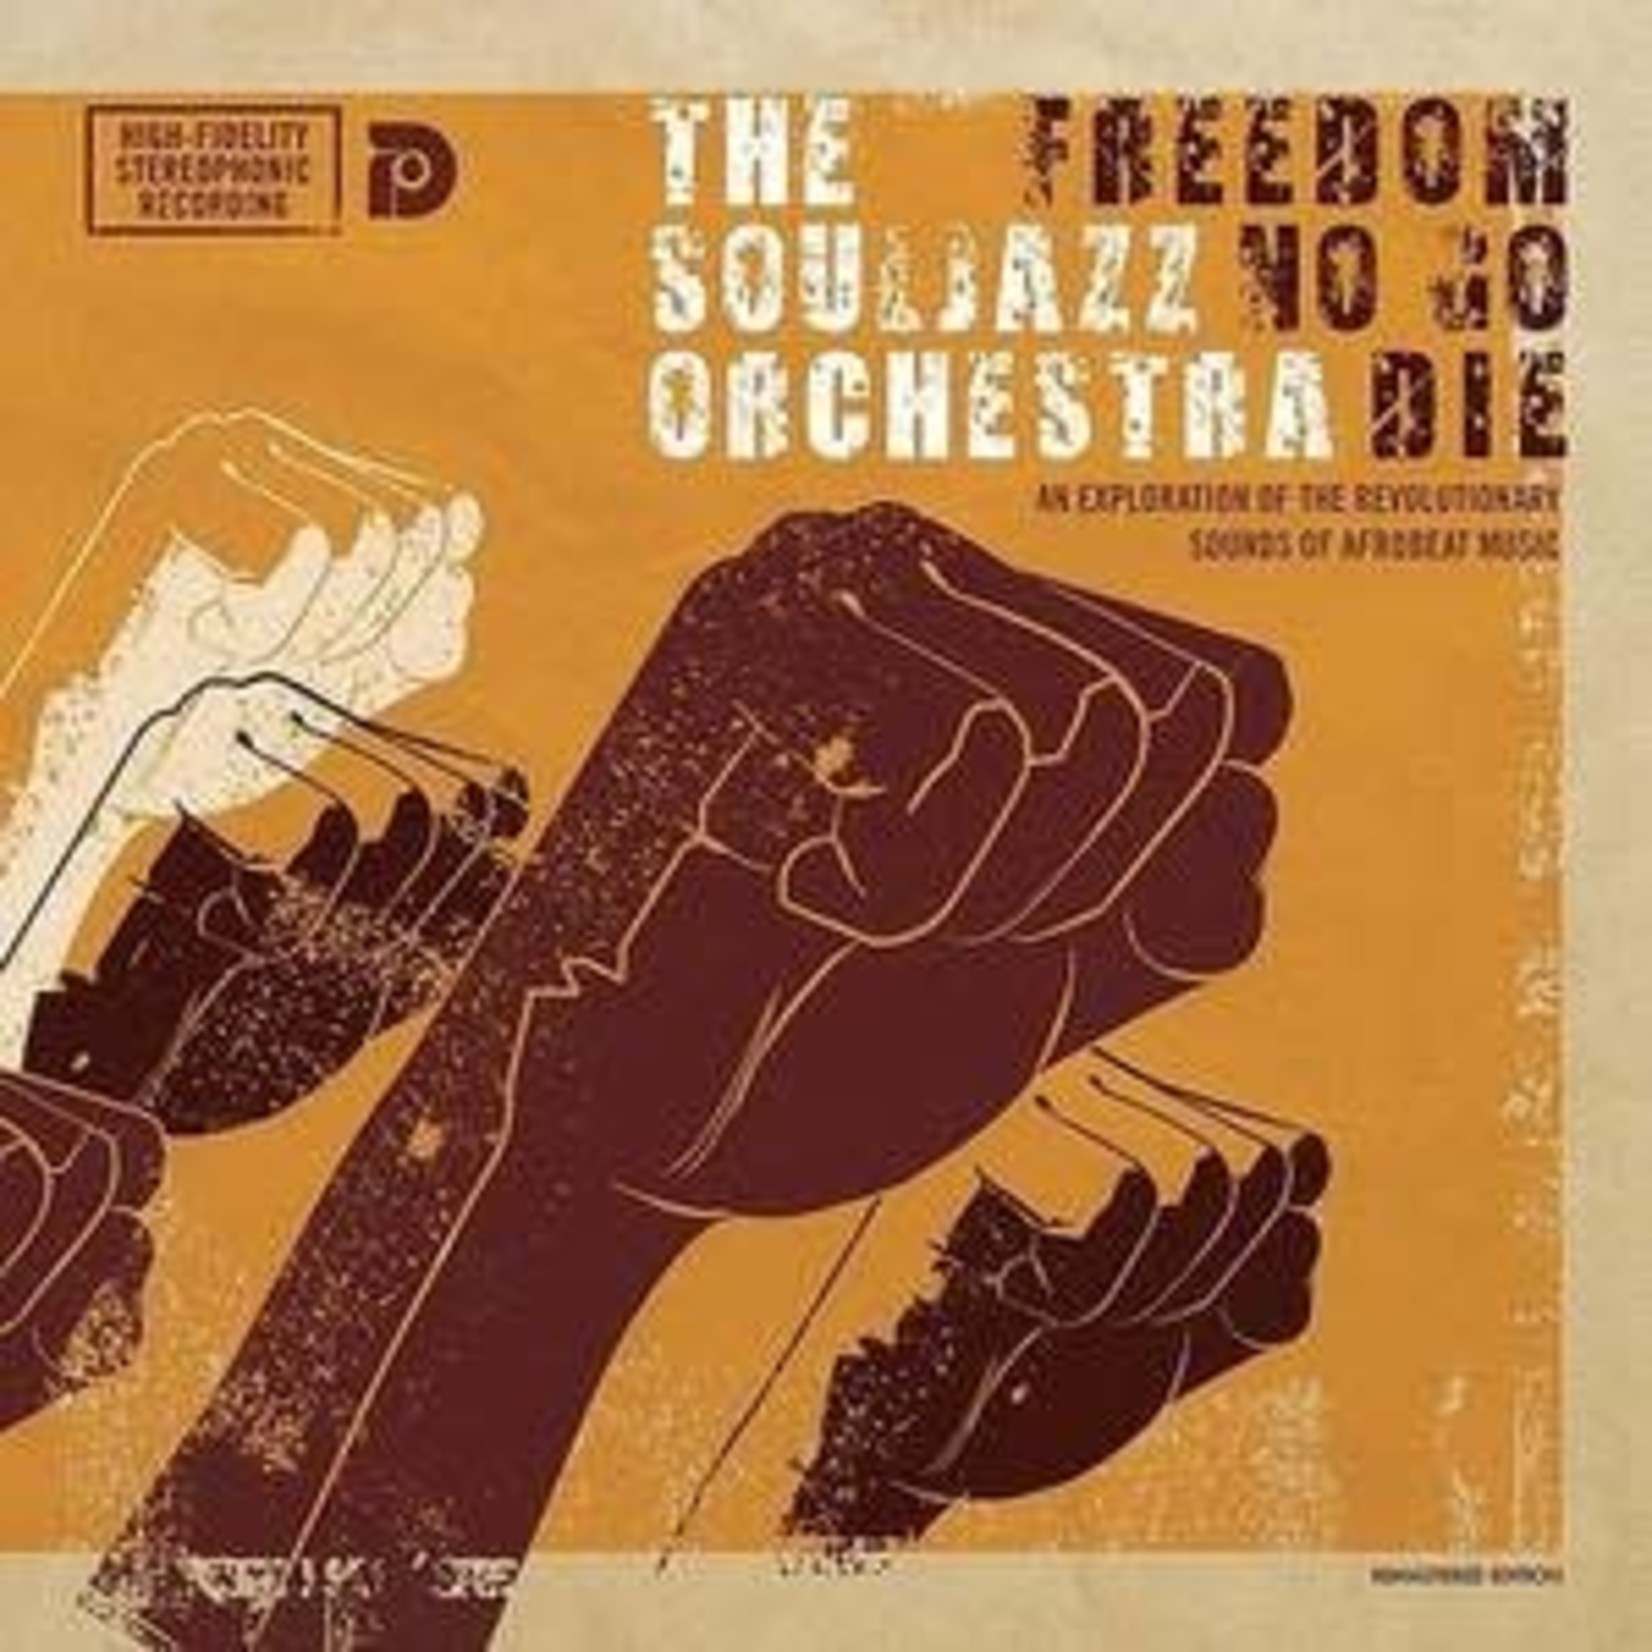 [New] Souljazz Orchestra - Freedom No Go Die - Do Right 20 edition (2LP, orange vinyl)